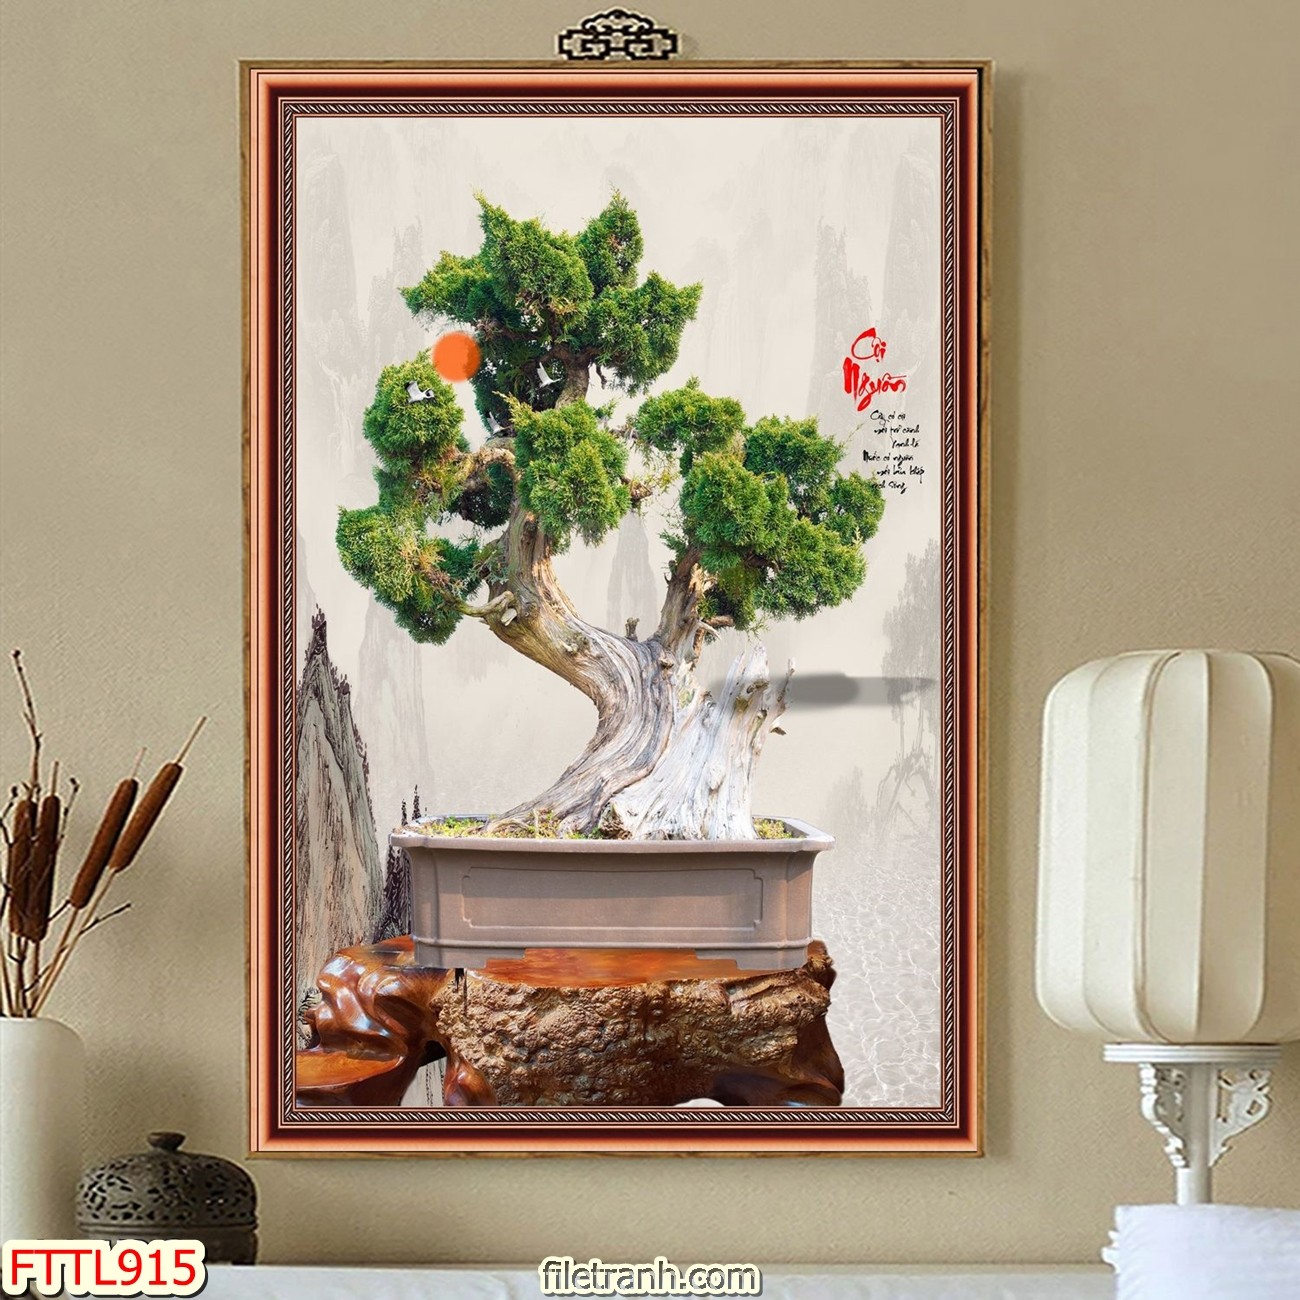 http://filetranh.com/file-tranh-chau-mai-bonsai/file-tranh-chau-mai-bonsai-fttl915.html